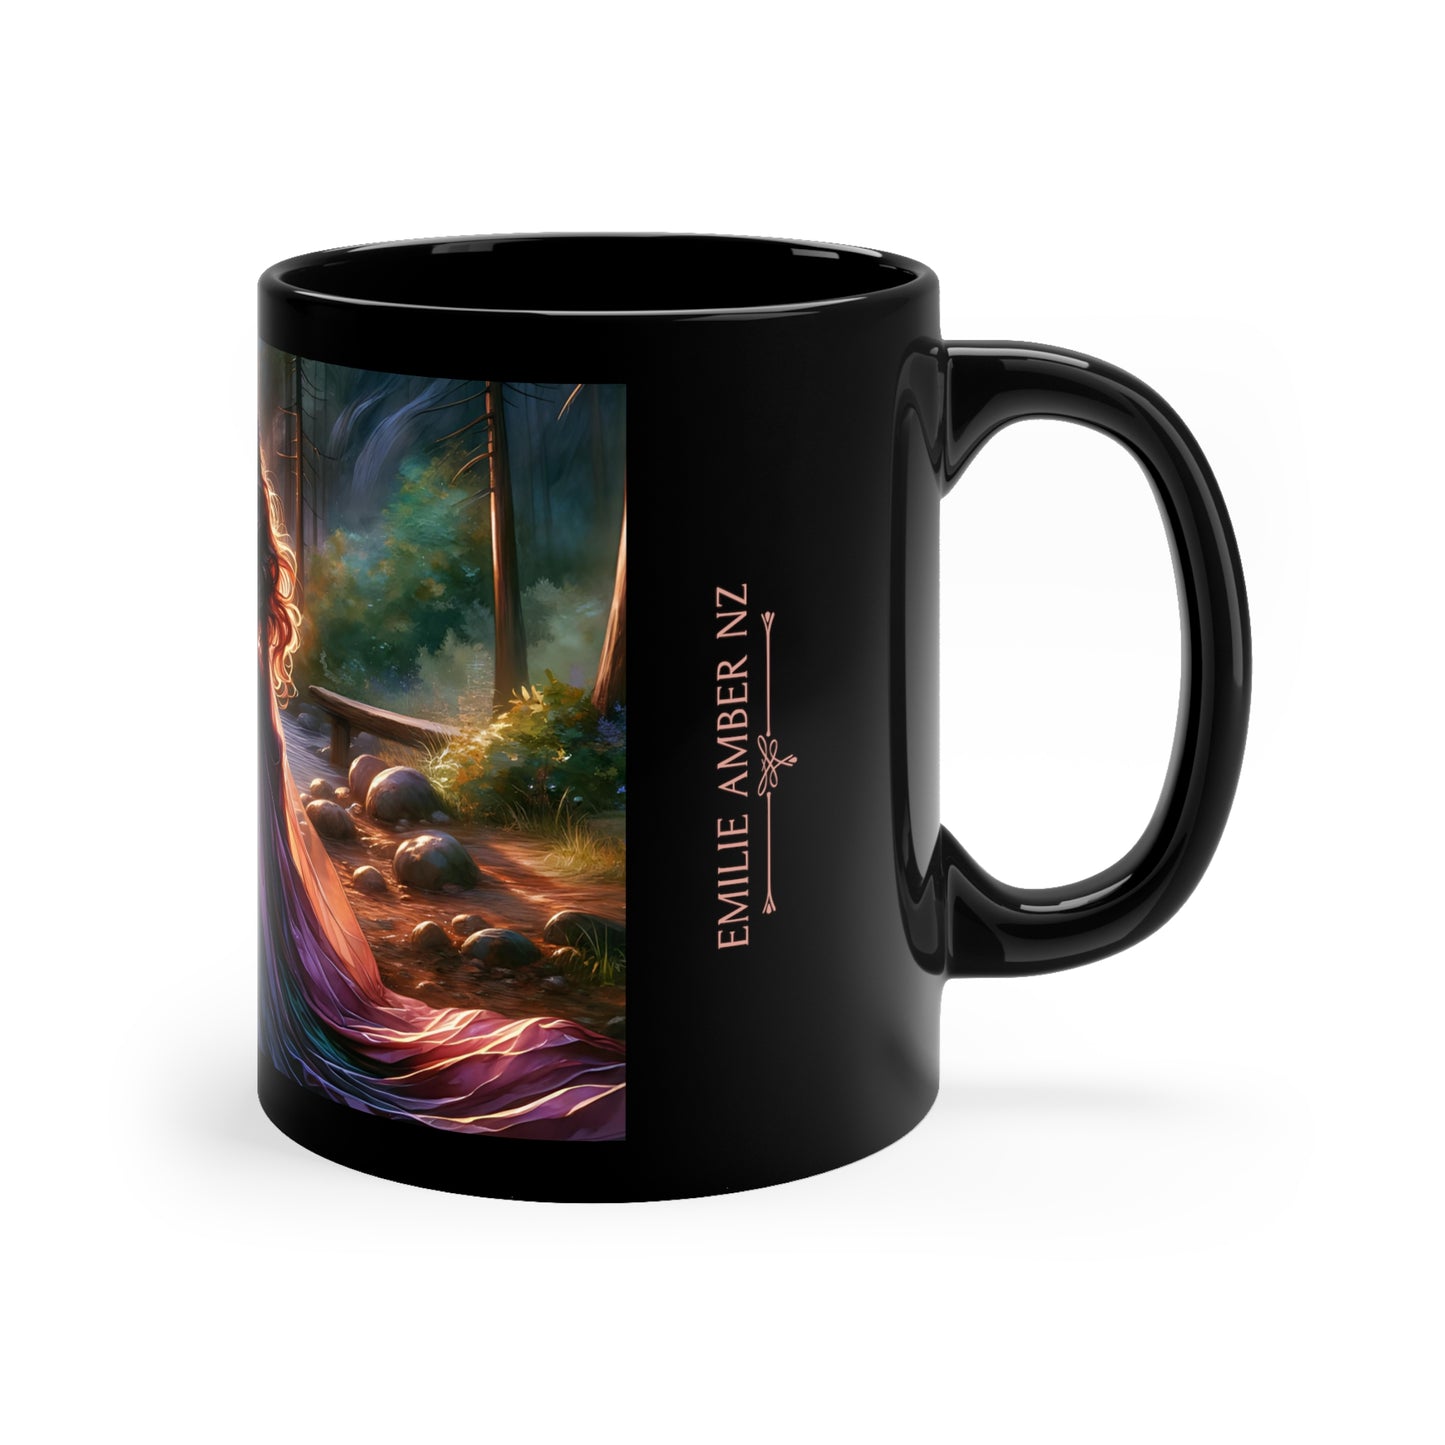 Once Upon A Fantasy - River Maiden Coffee Mug, 11oz